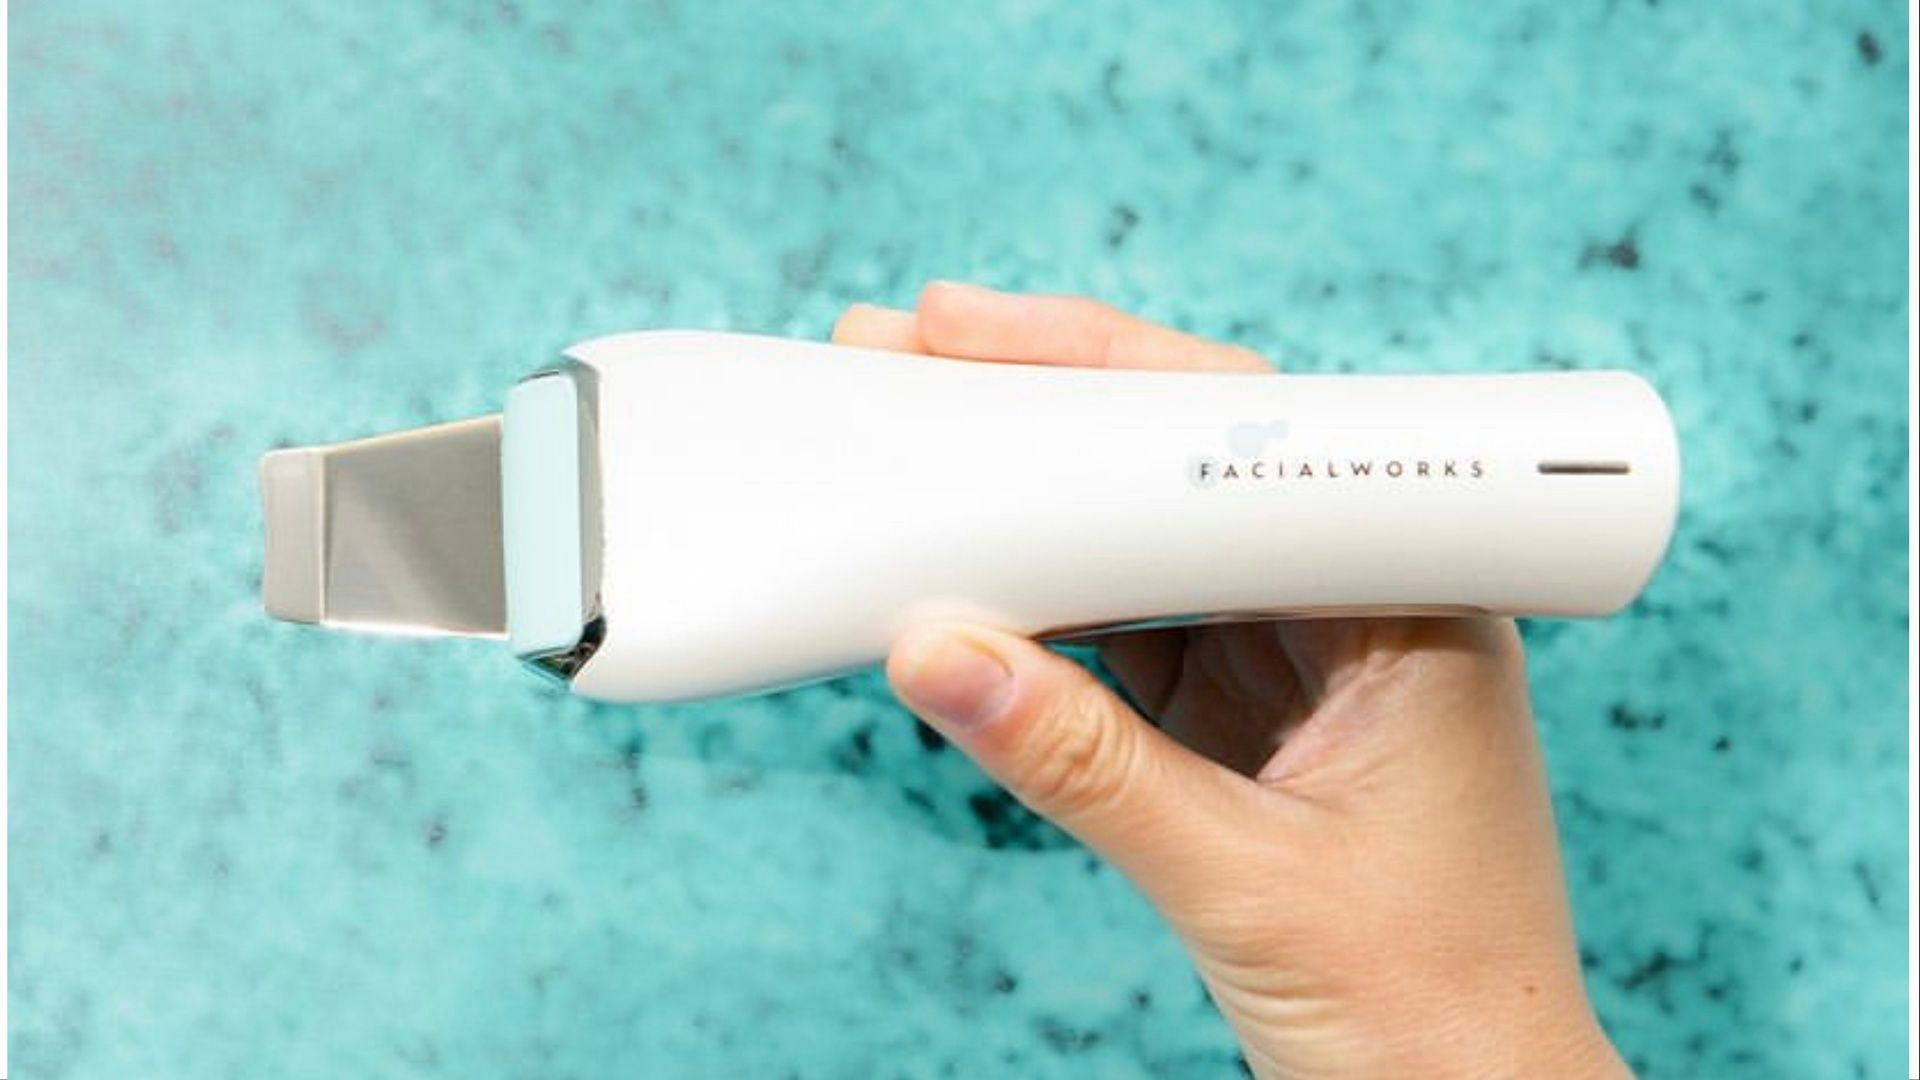 Ultrasonic skin spatula is a popular skincare tool. (Image via Instagram/facialworks)